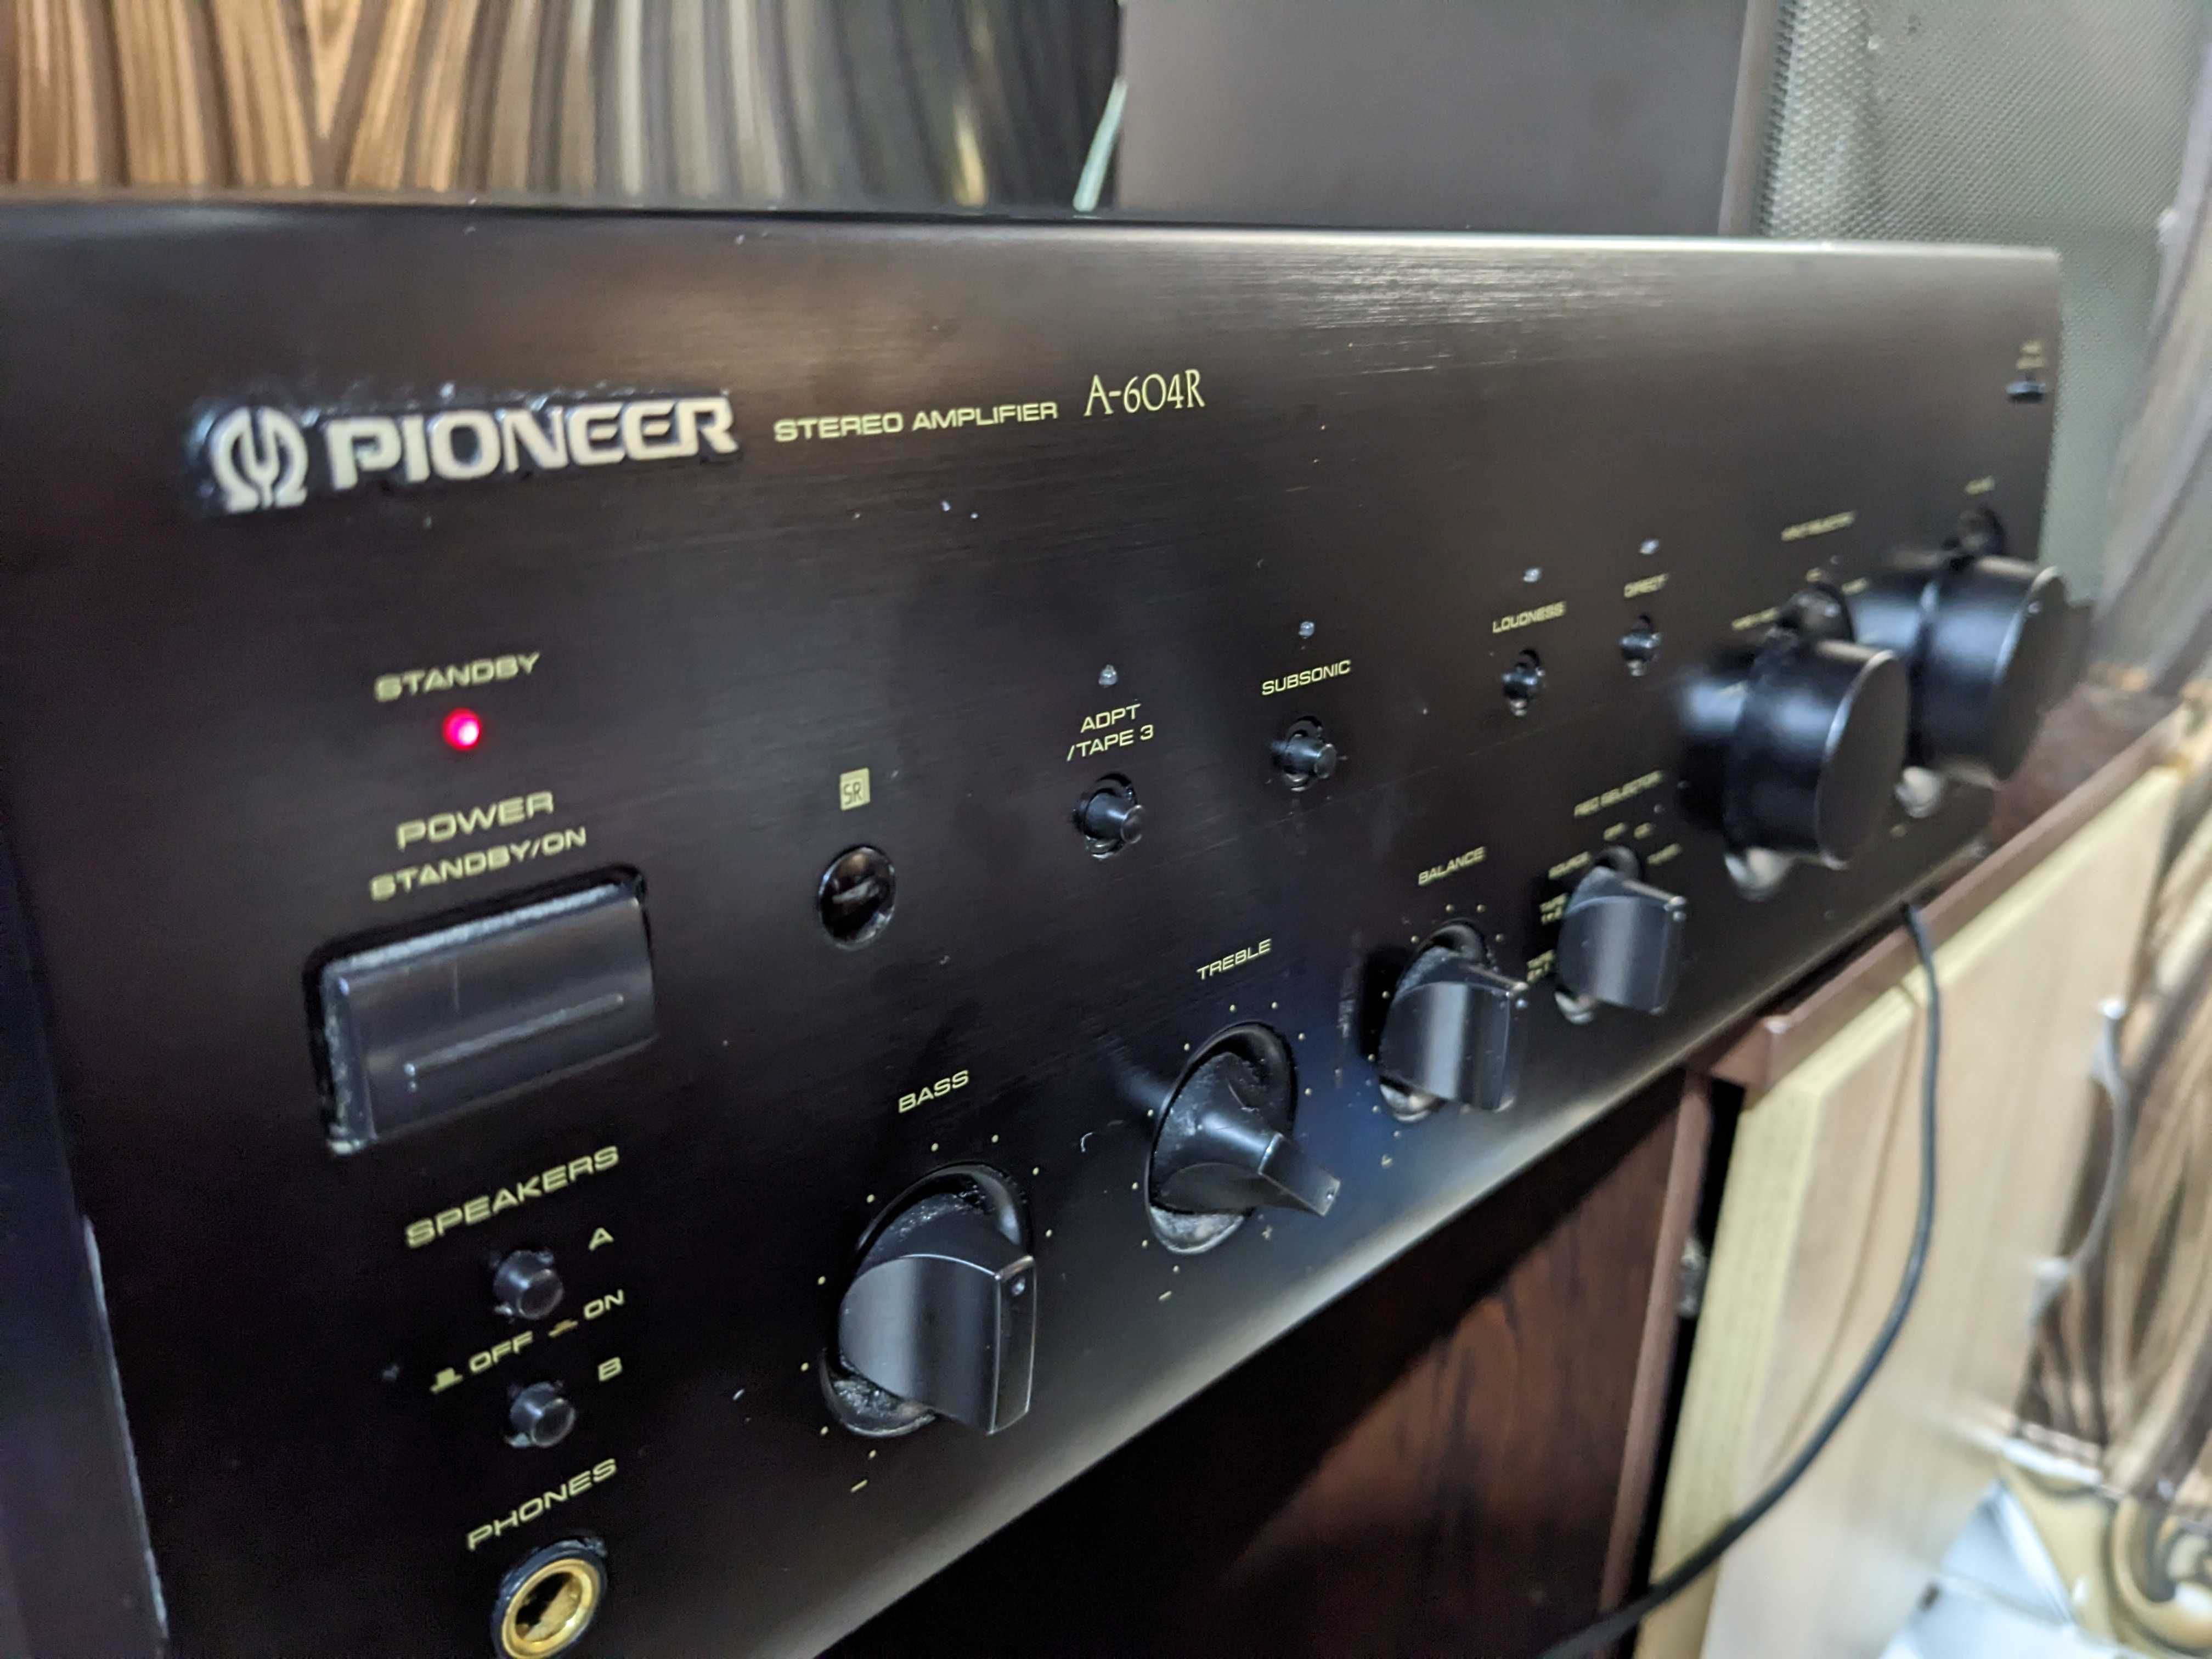 Pioneer a604r amplifer